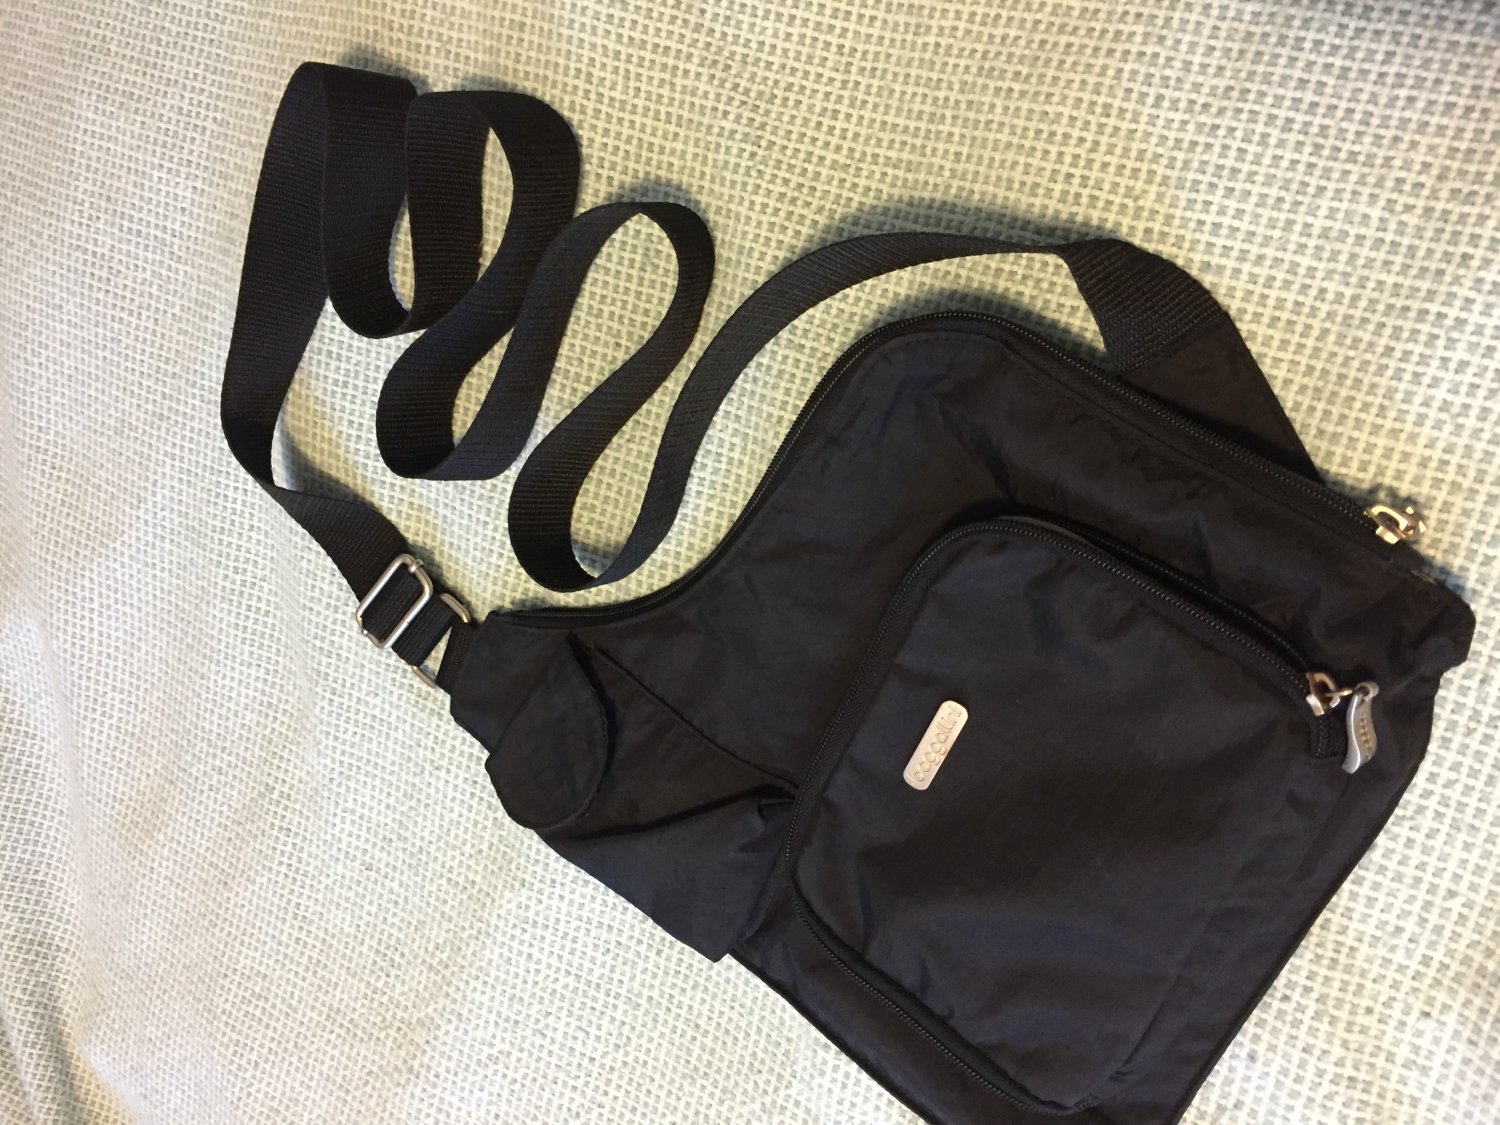 Baggallini crossbody nylon Black lie flat profile Travel shoulder bag tan lining